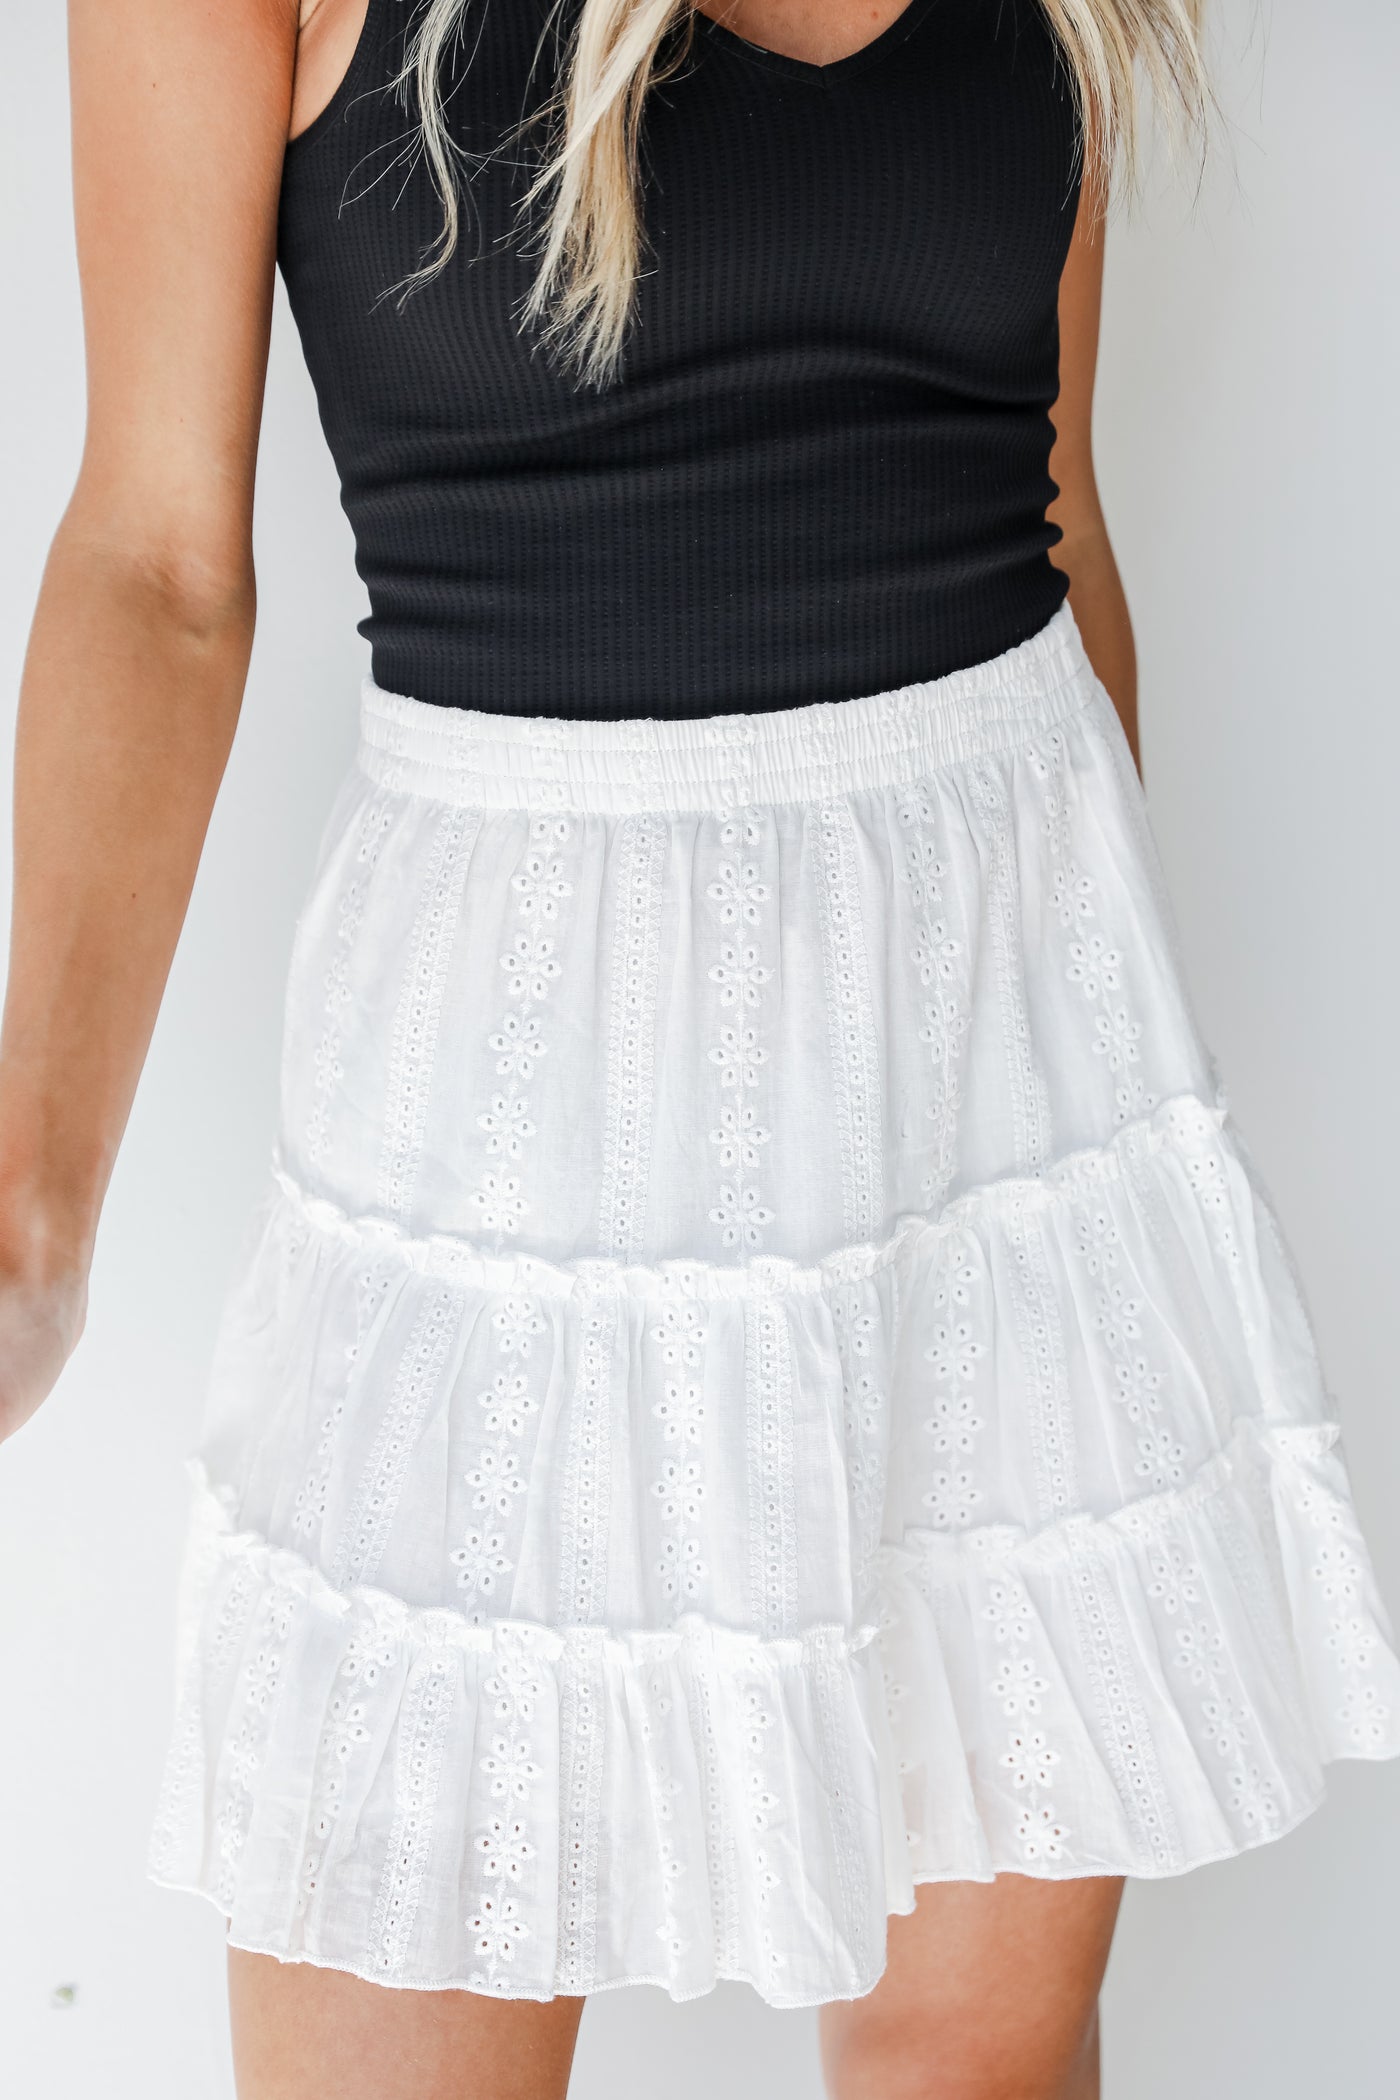 Eyelet Mini Skirt in white front view